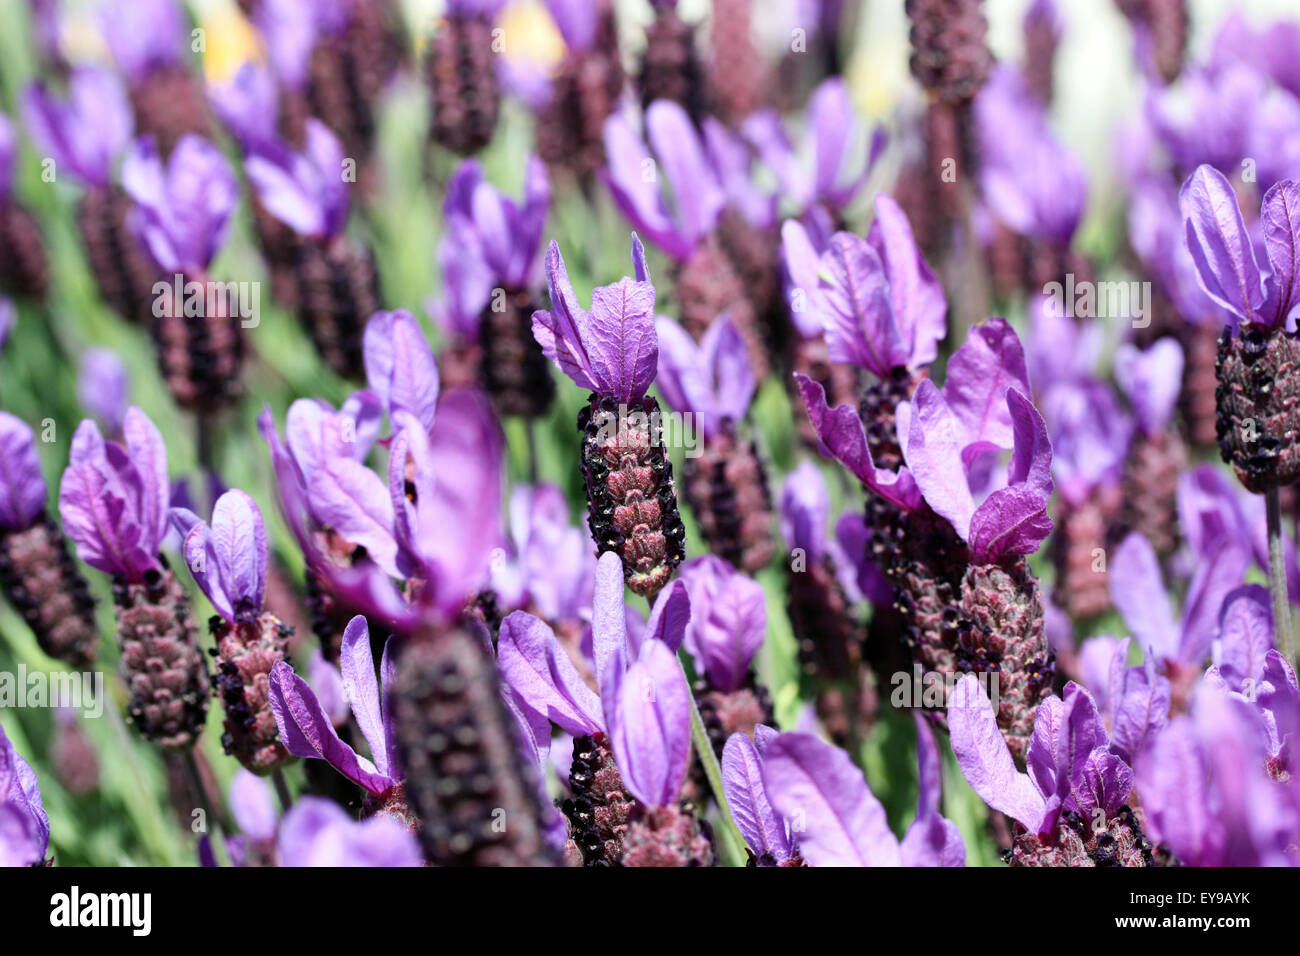 Field of purple lavender flowers Stock Photo